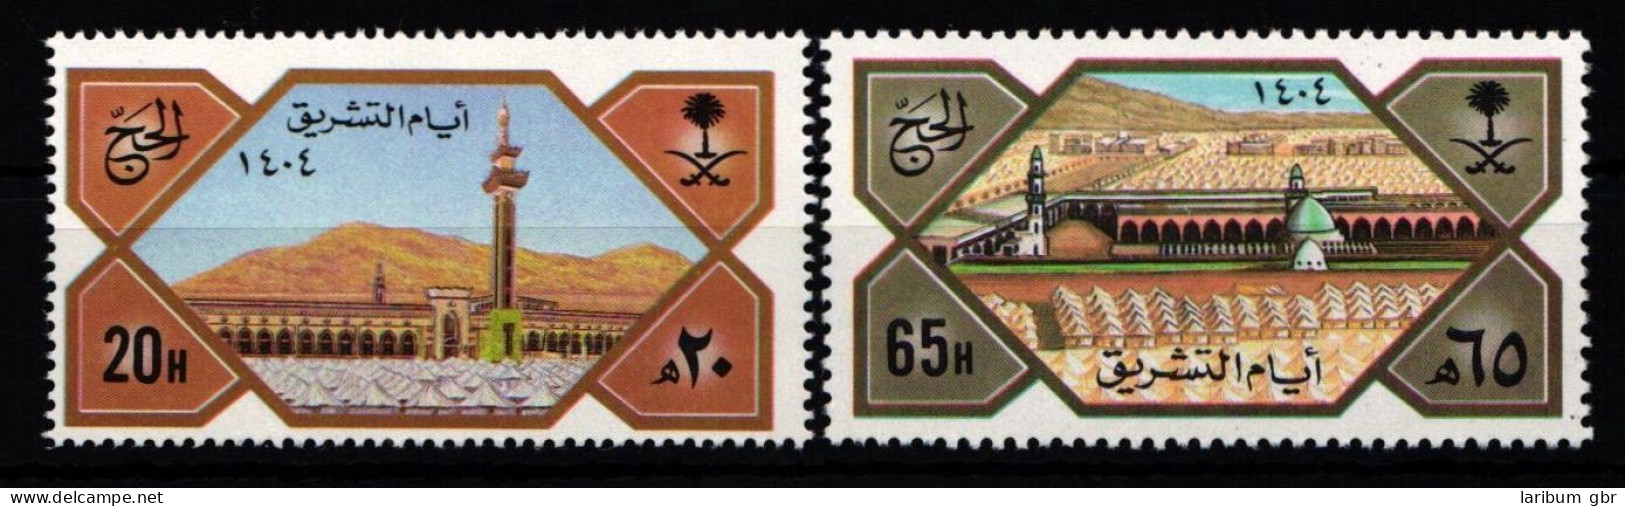 Saudi Arabien 788-789 Postfrisch #JZ640 - Saudi Arabia